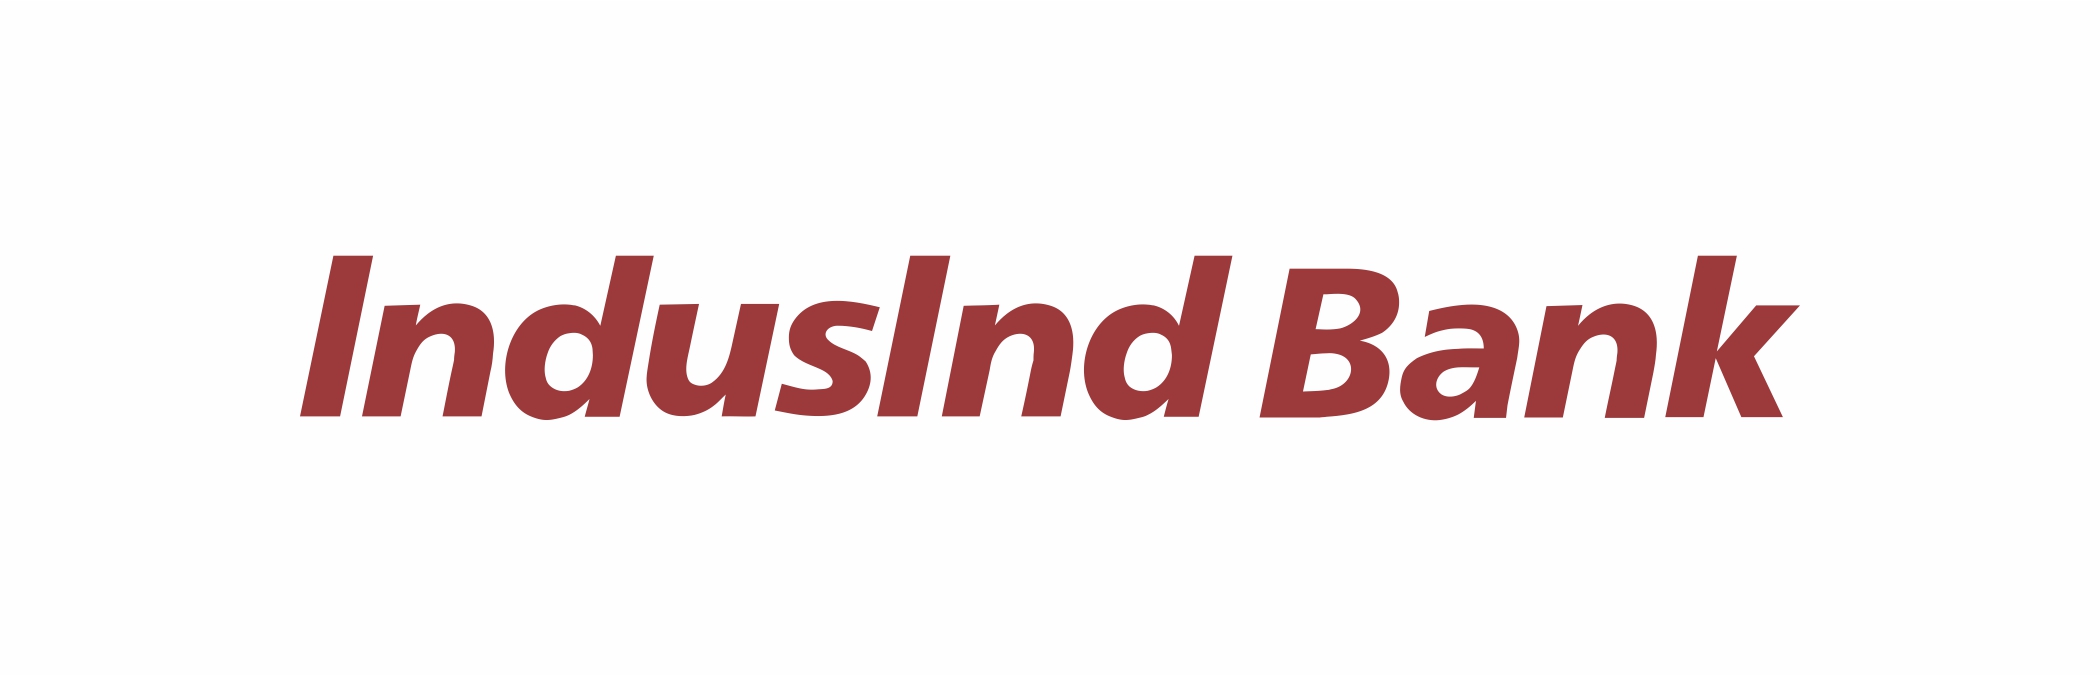 indusindbank_logo